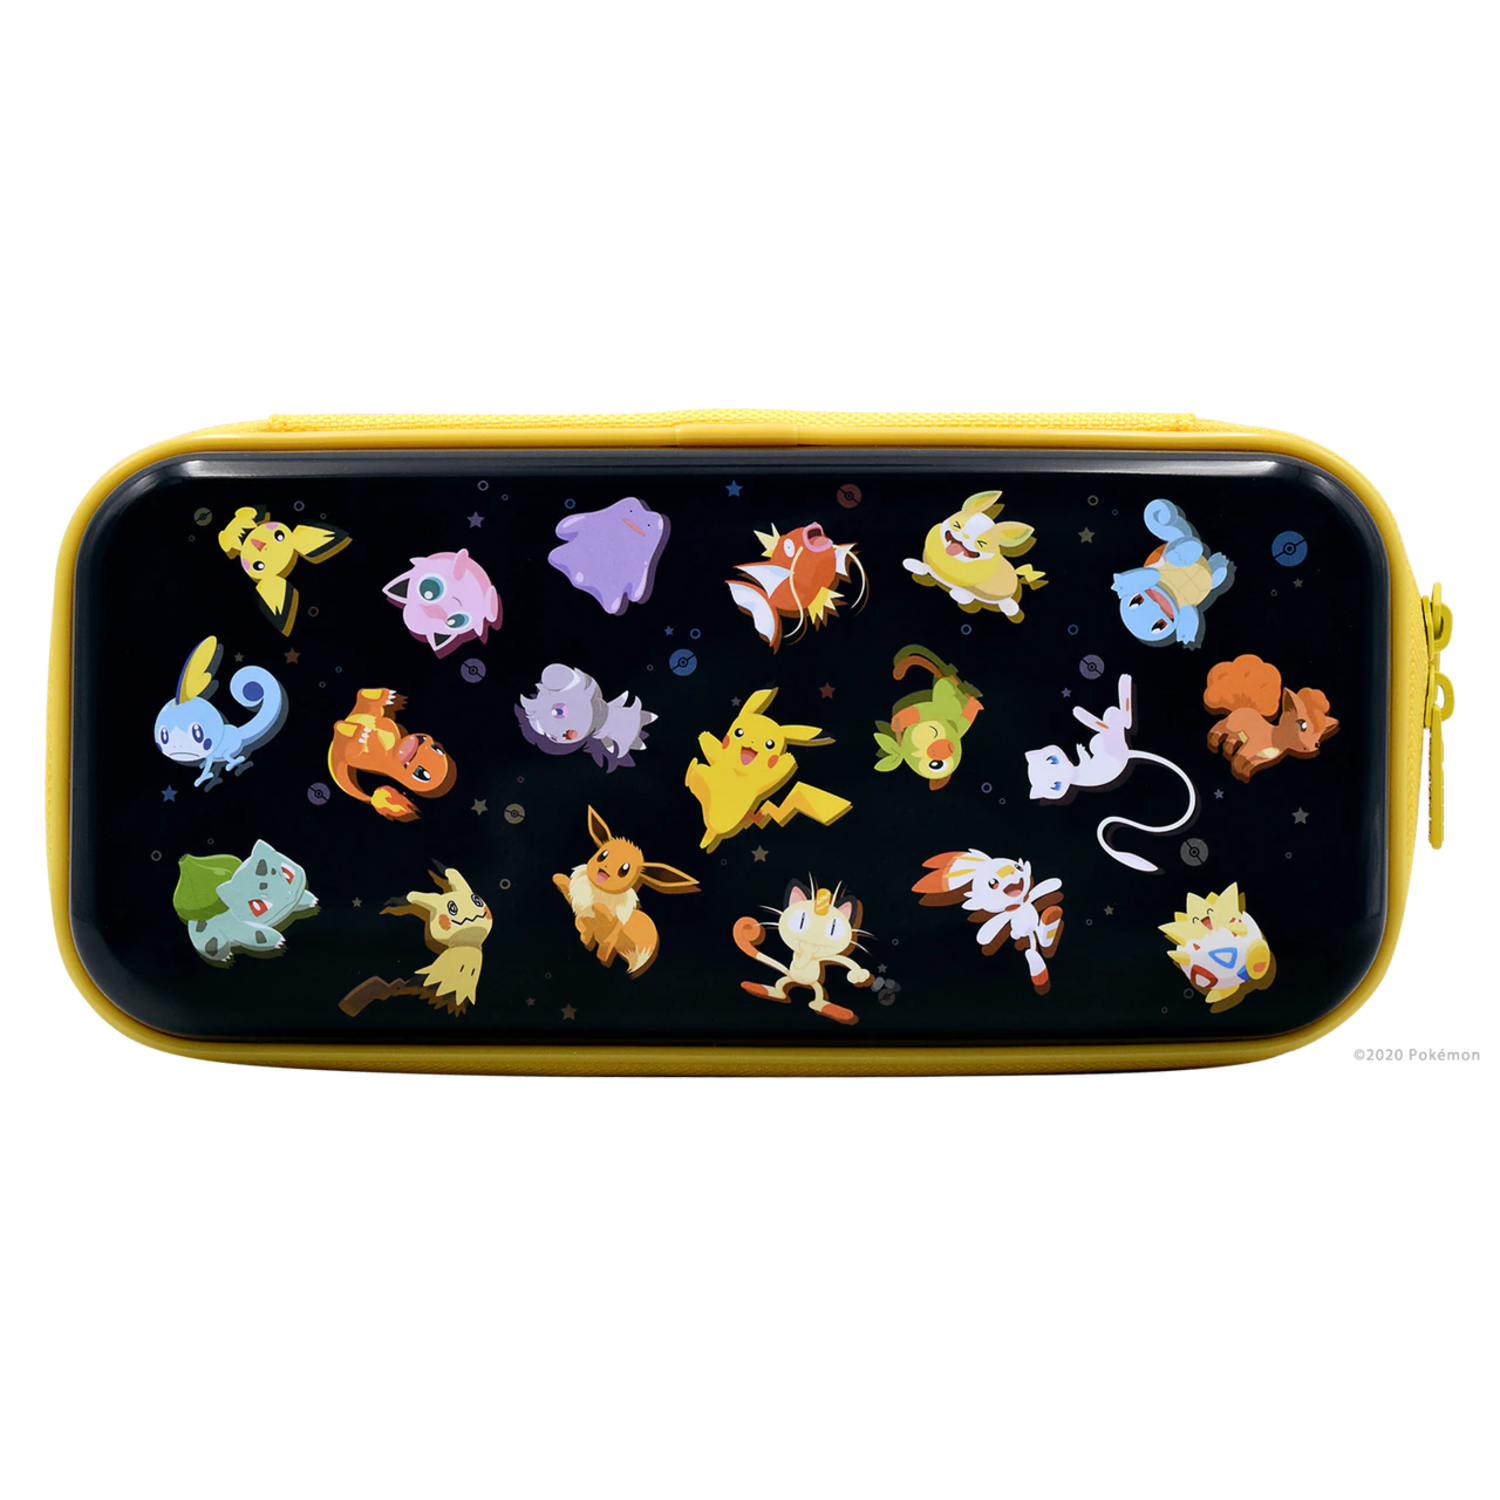 Case Vault Pokemon Stars para Nintendo Switch